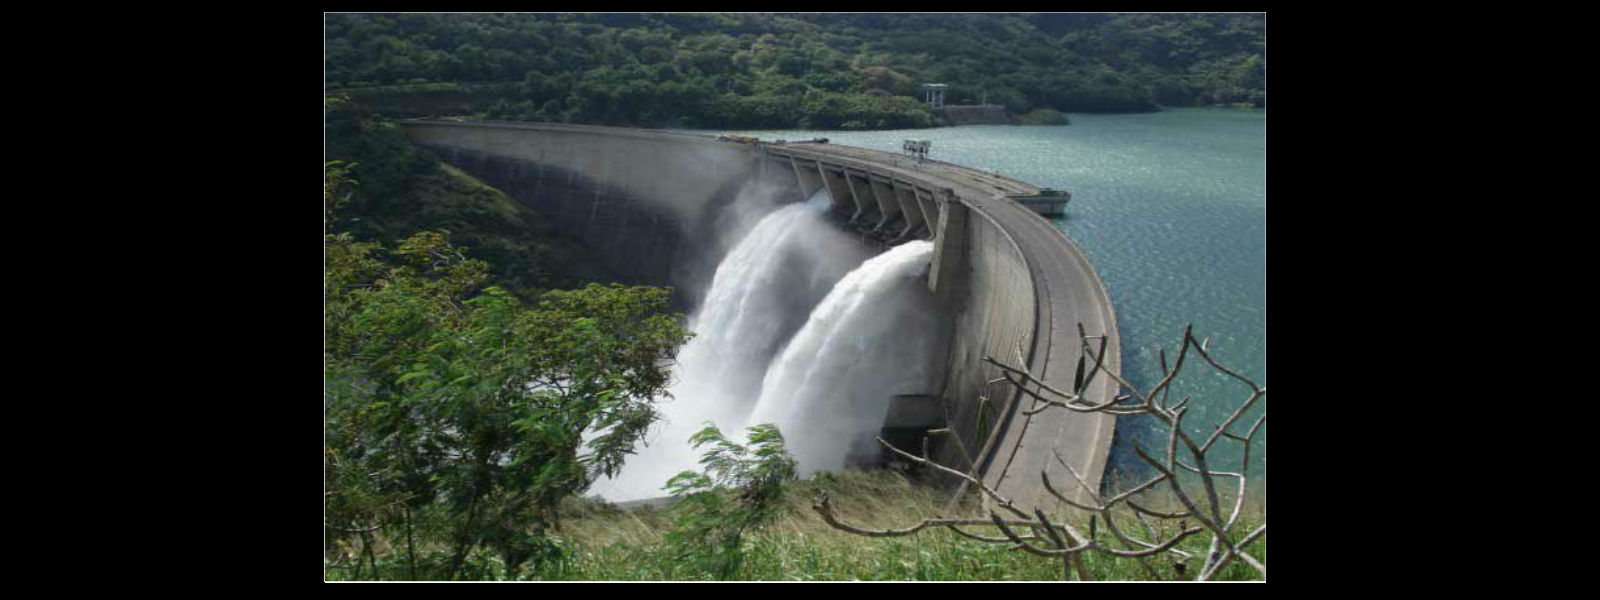 Rain increases hydropower generation